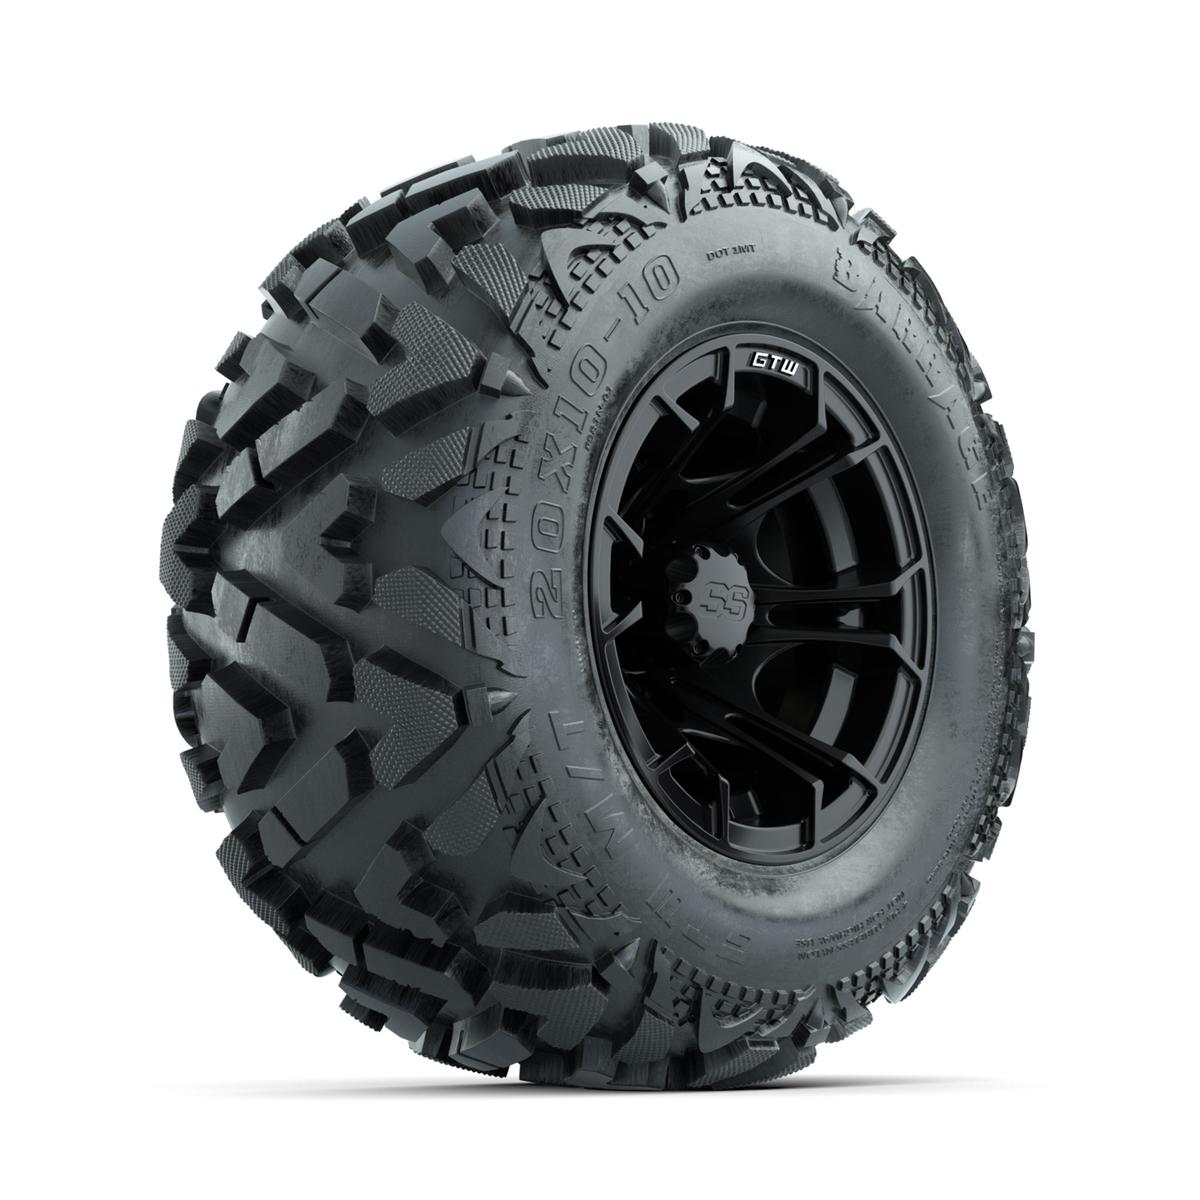 GTW Spyder Matte Black 10 in Wheels with 20x10-10 Barrage Mud Tires – Full Set